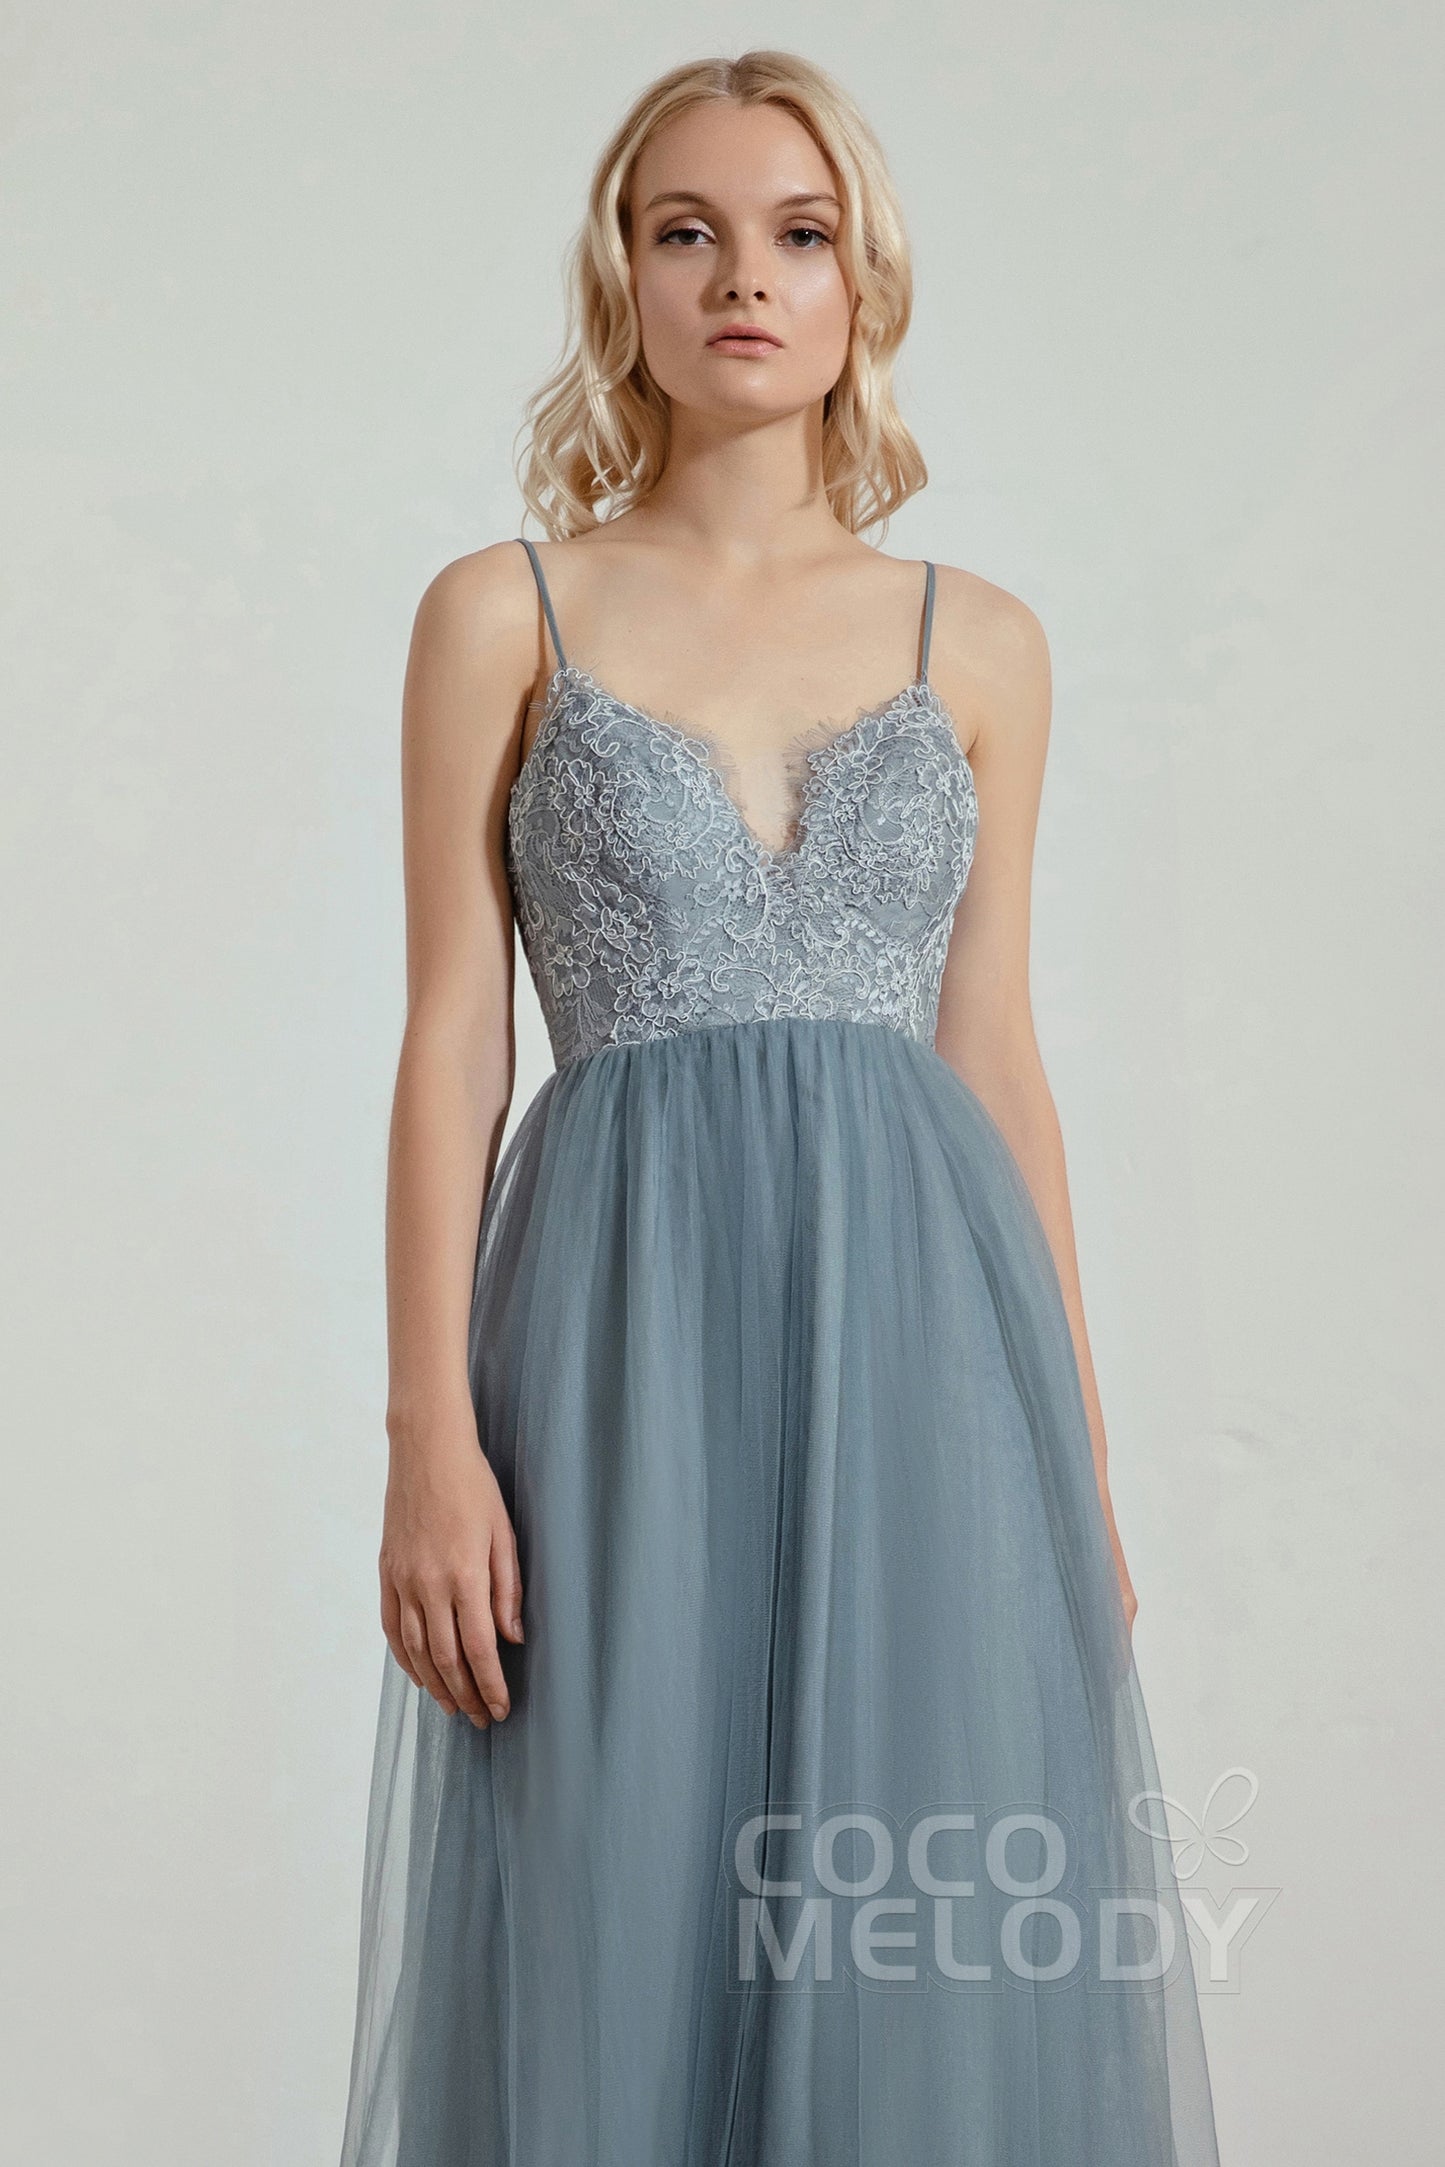 A-Line Floor Length Tulle/Lace Bridesmaid Dress CB0437